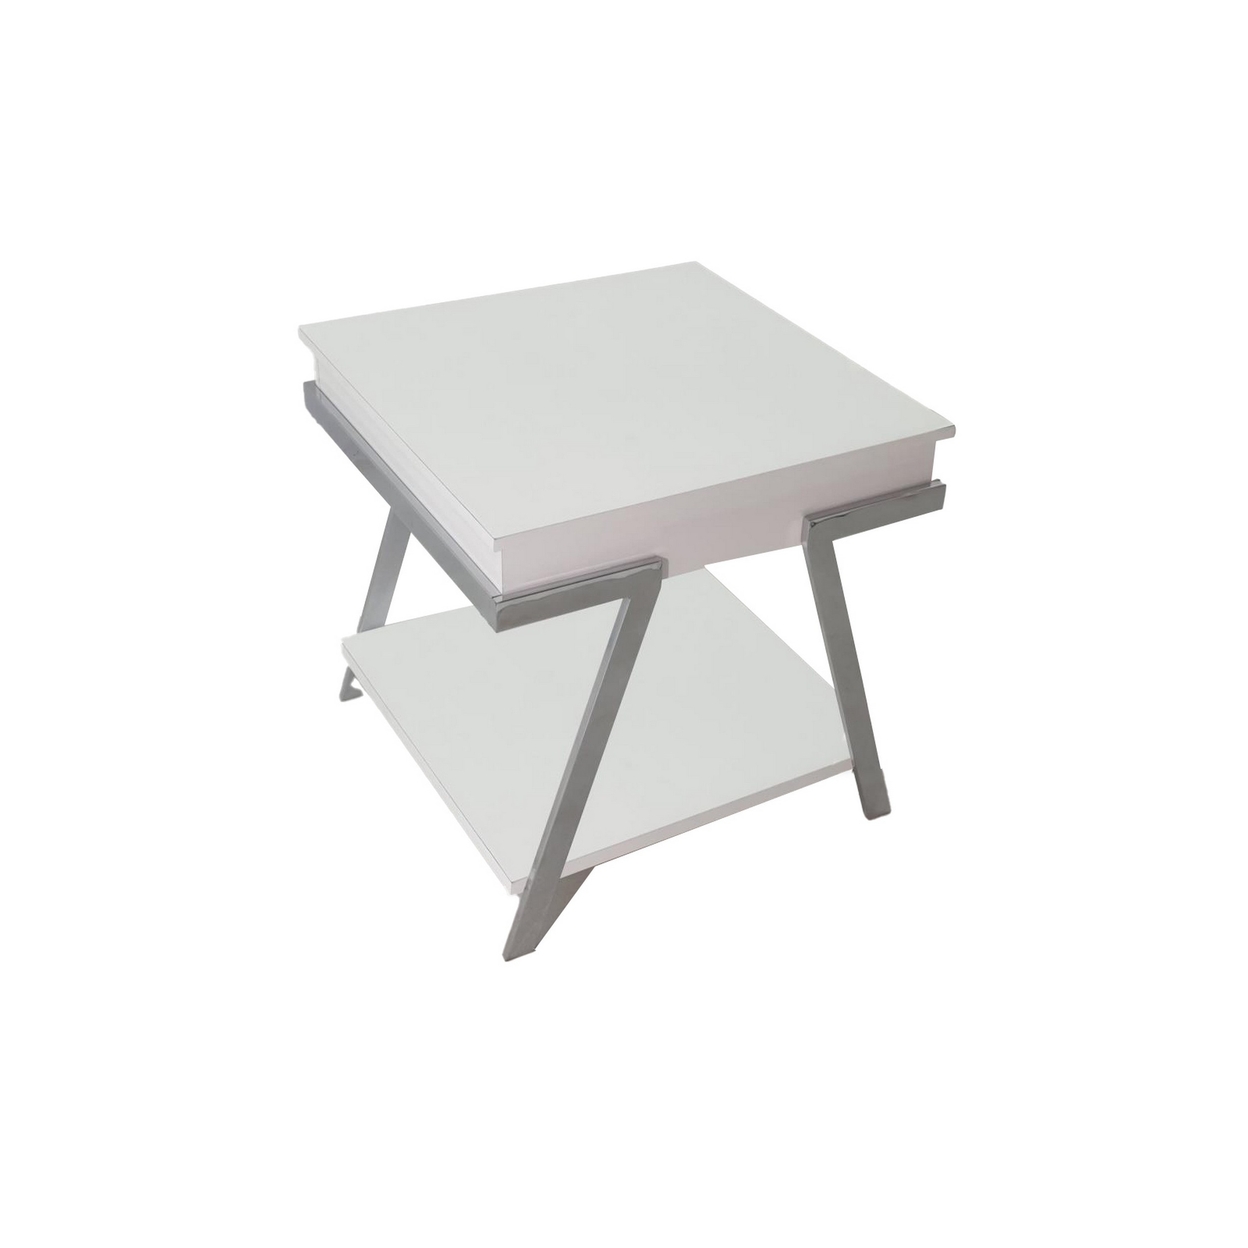 Casey 26 Inch End Table, Chrome Angled Metal Frame, Square Glossy White Top - Saltoro Sherpi